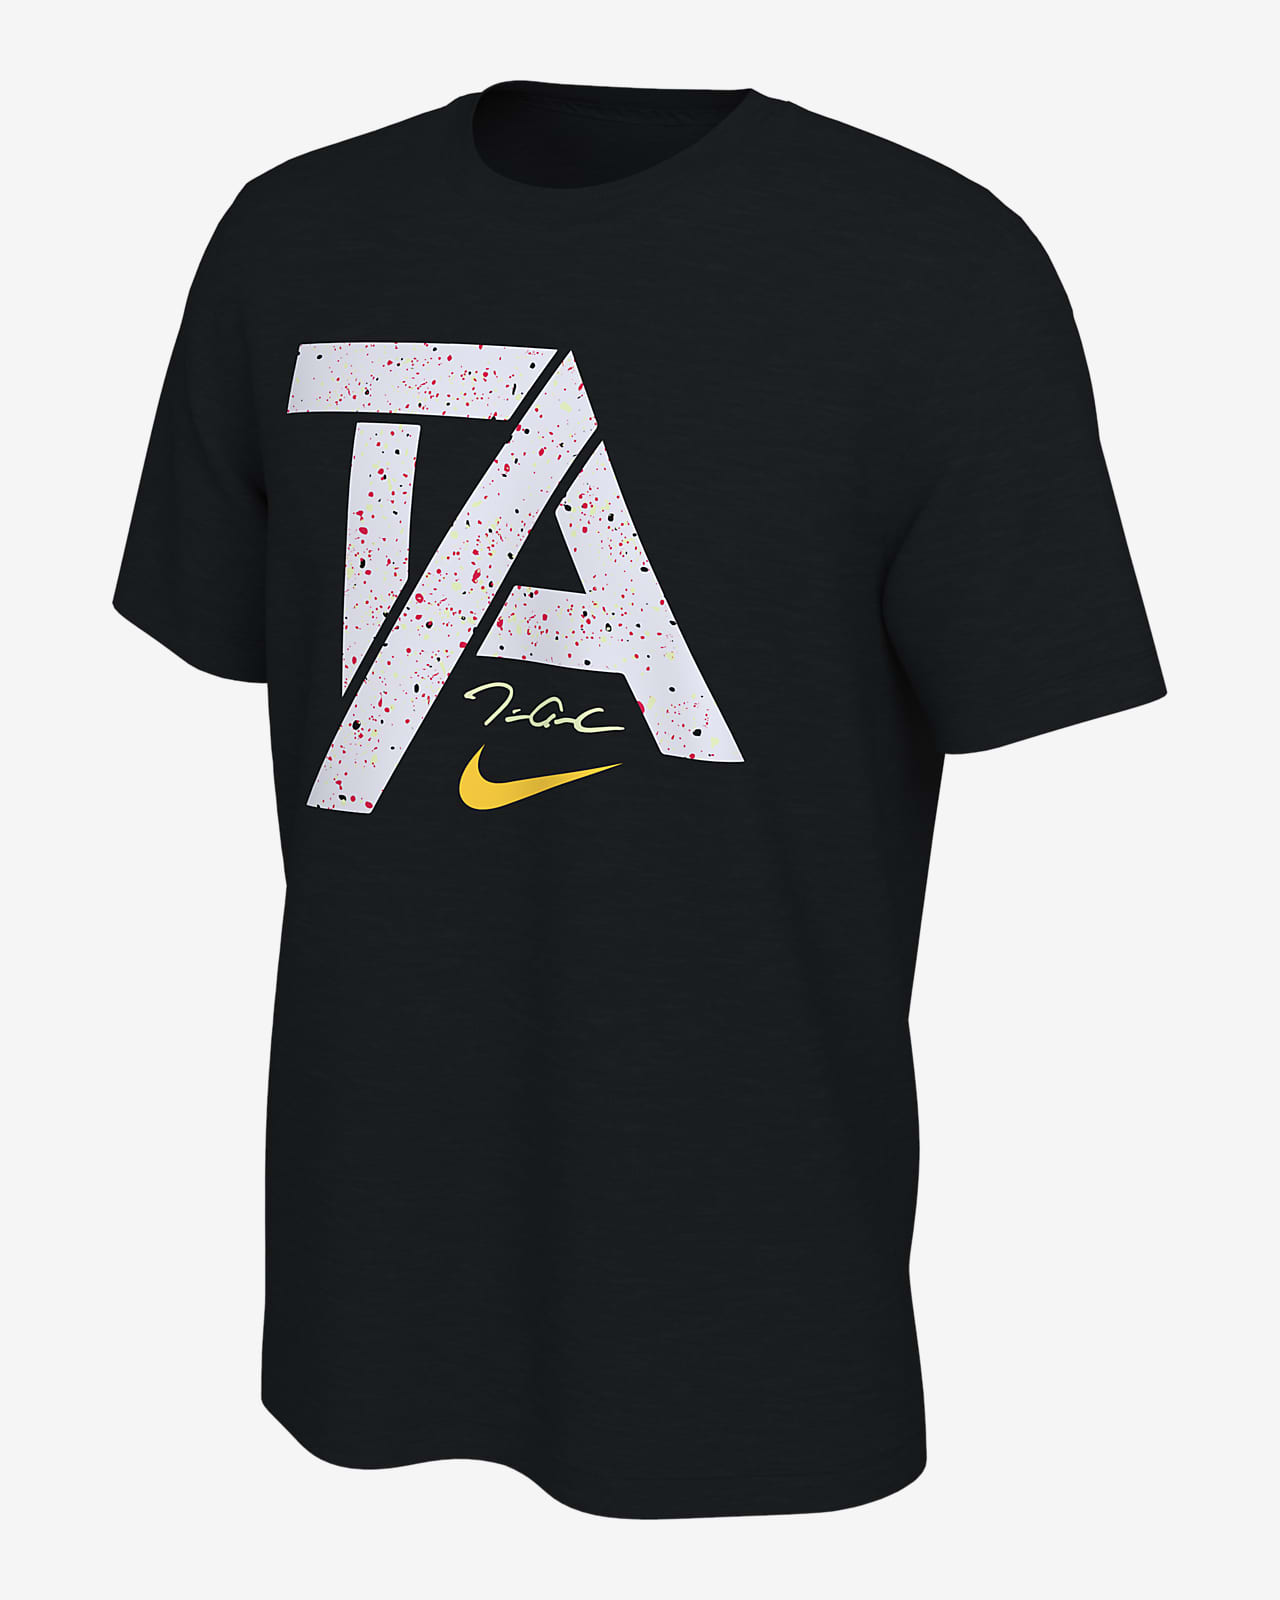 Tim Anderson Men's Nike Baseball T-Shirt